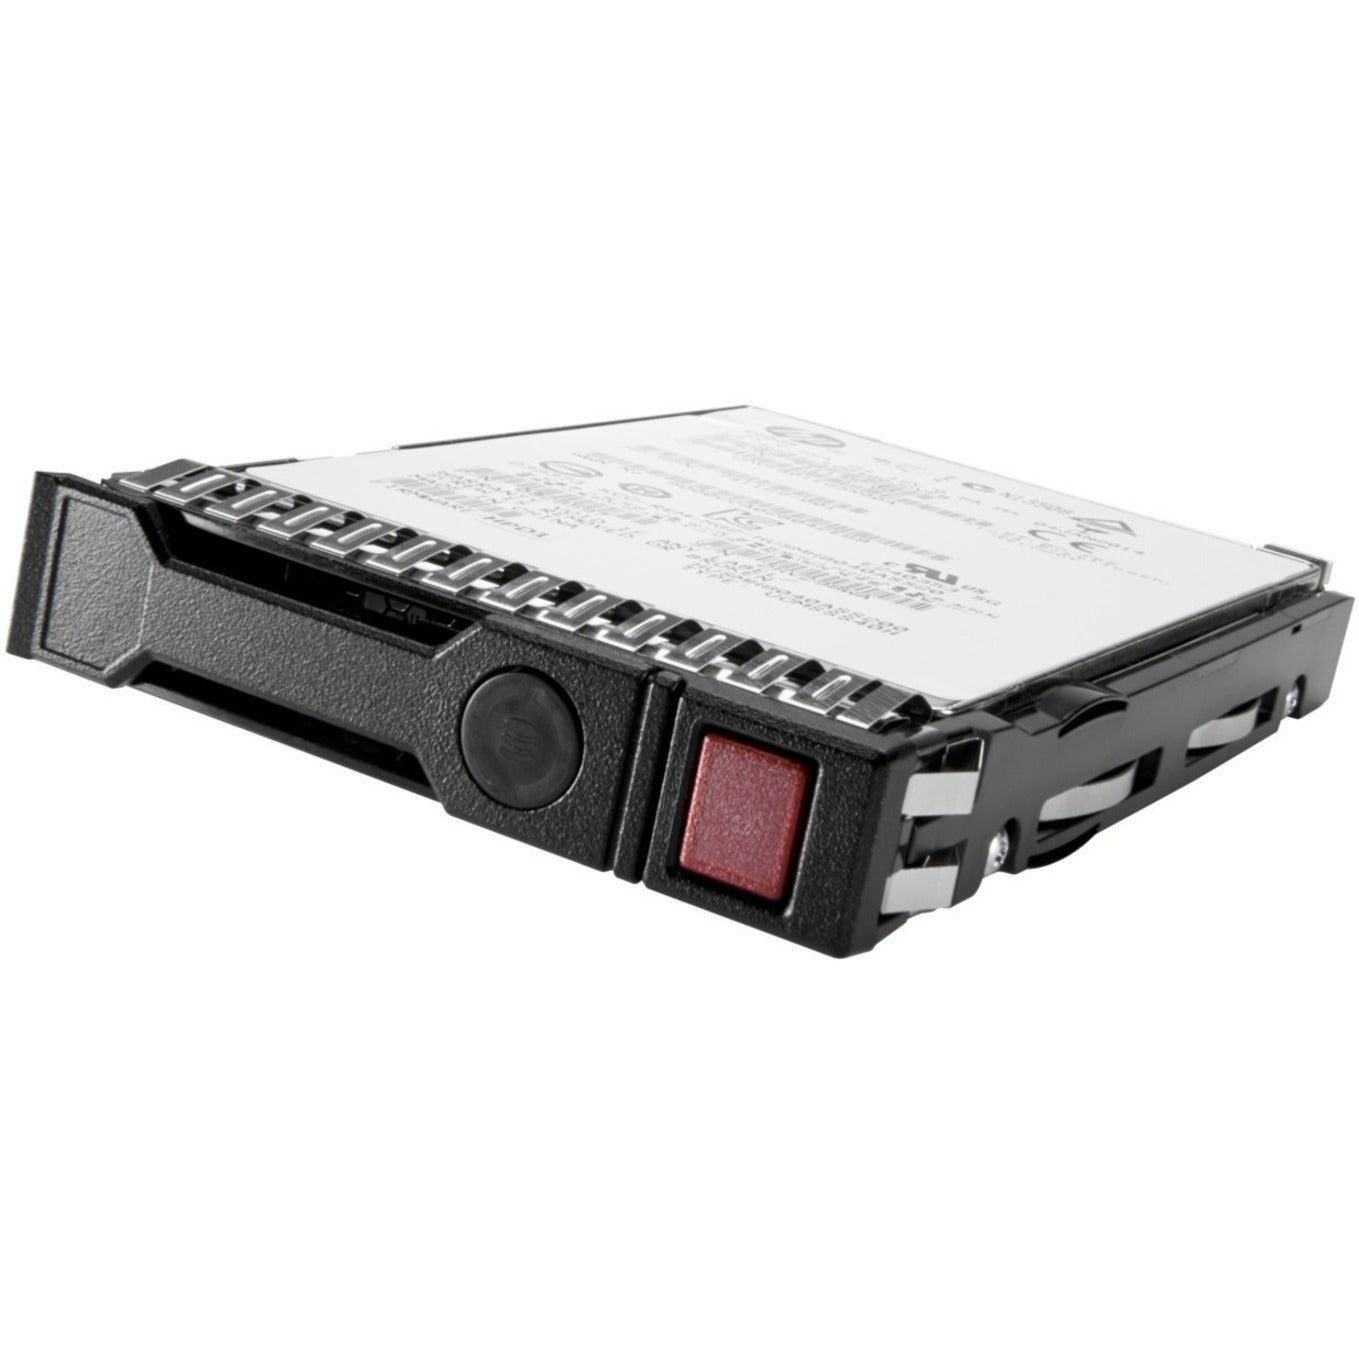 HPE 872491-B21 4TB SATA 6G Midline 7.2K LFF (3.5in) SC 1yr Wty Digitally Signed Firmware HDD, 3.5" Internal SATA Hard Drive